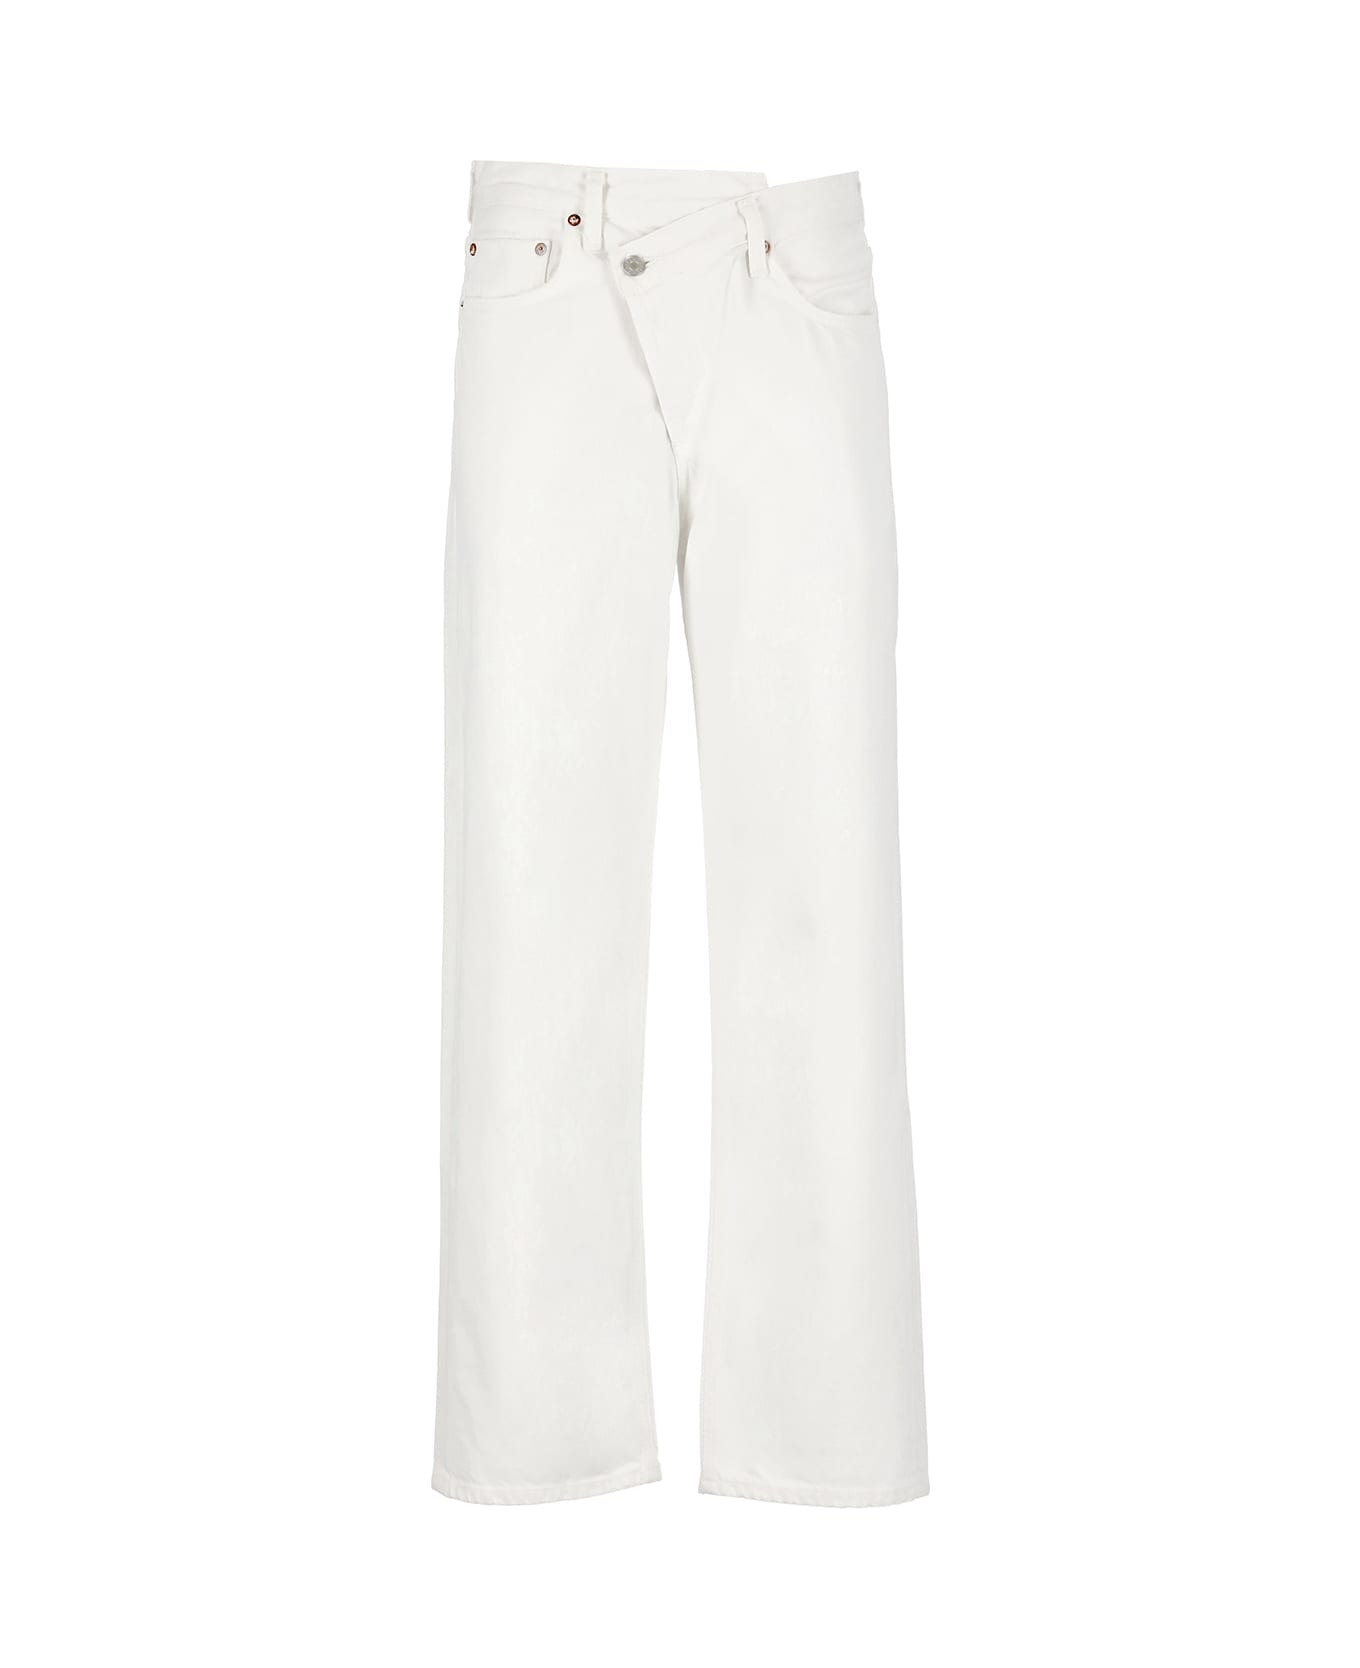 AGOLDE Criss Cross Jeans - White